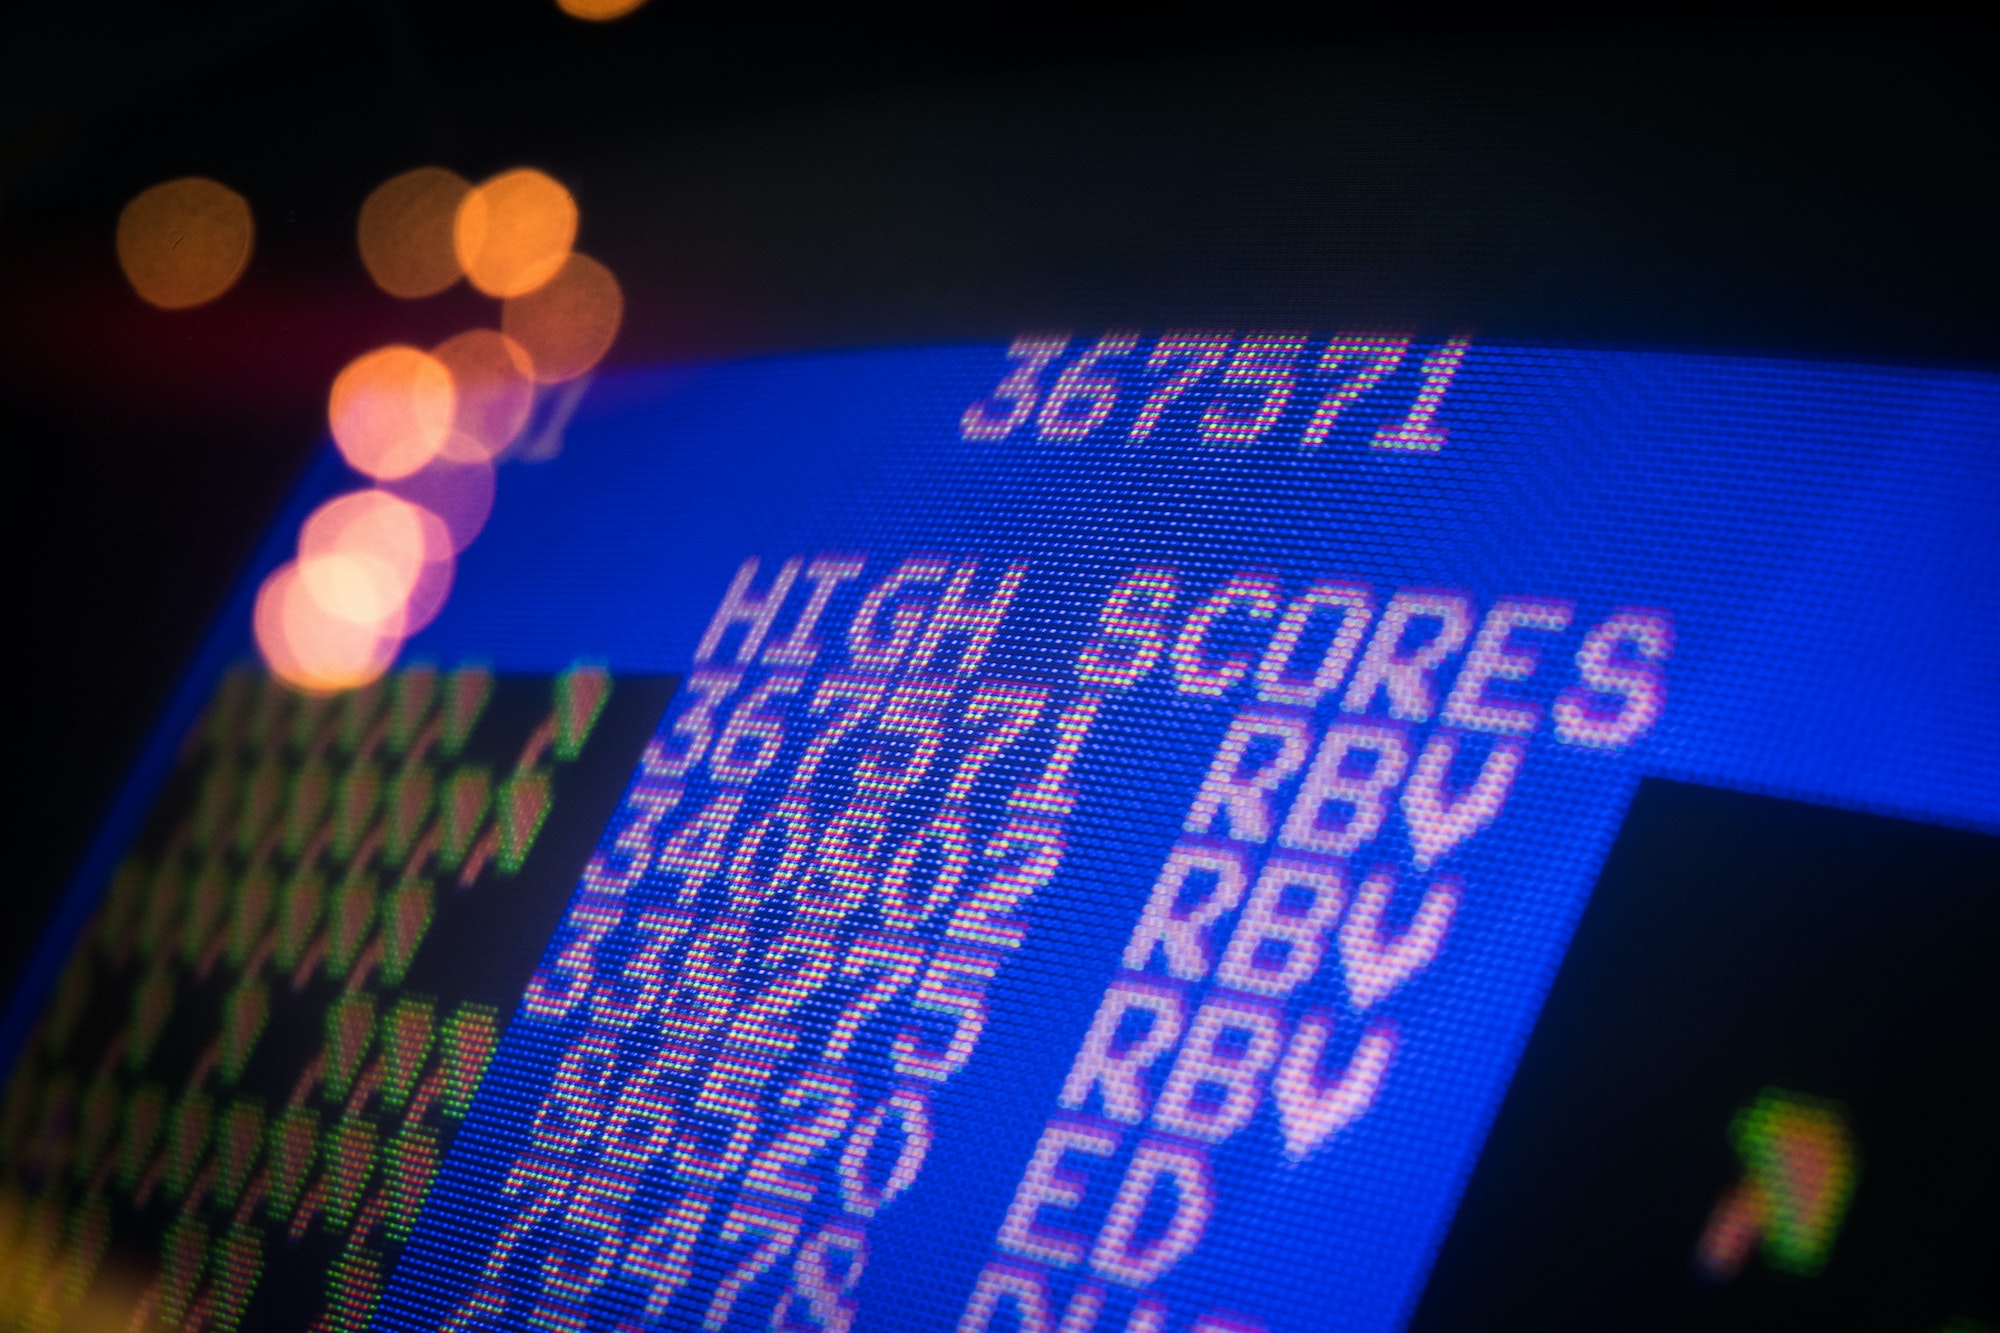 Arcade game top score